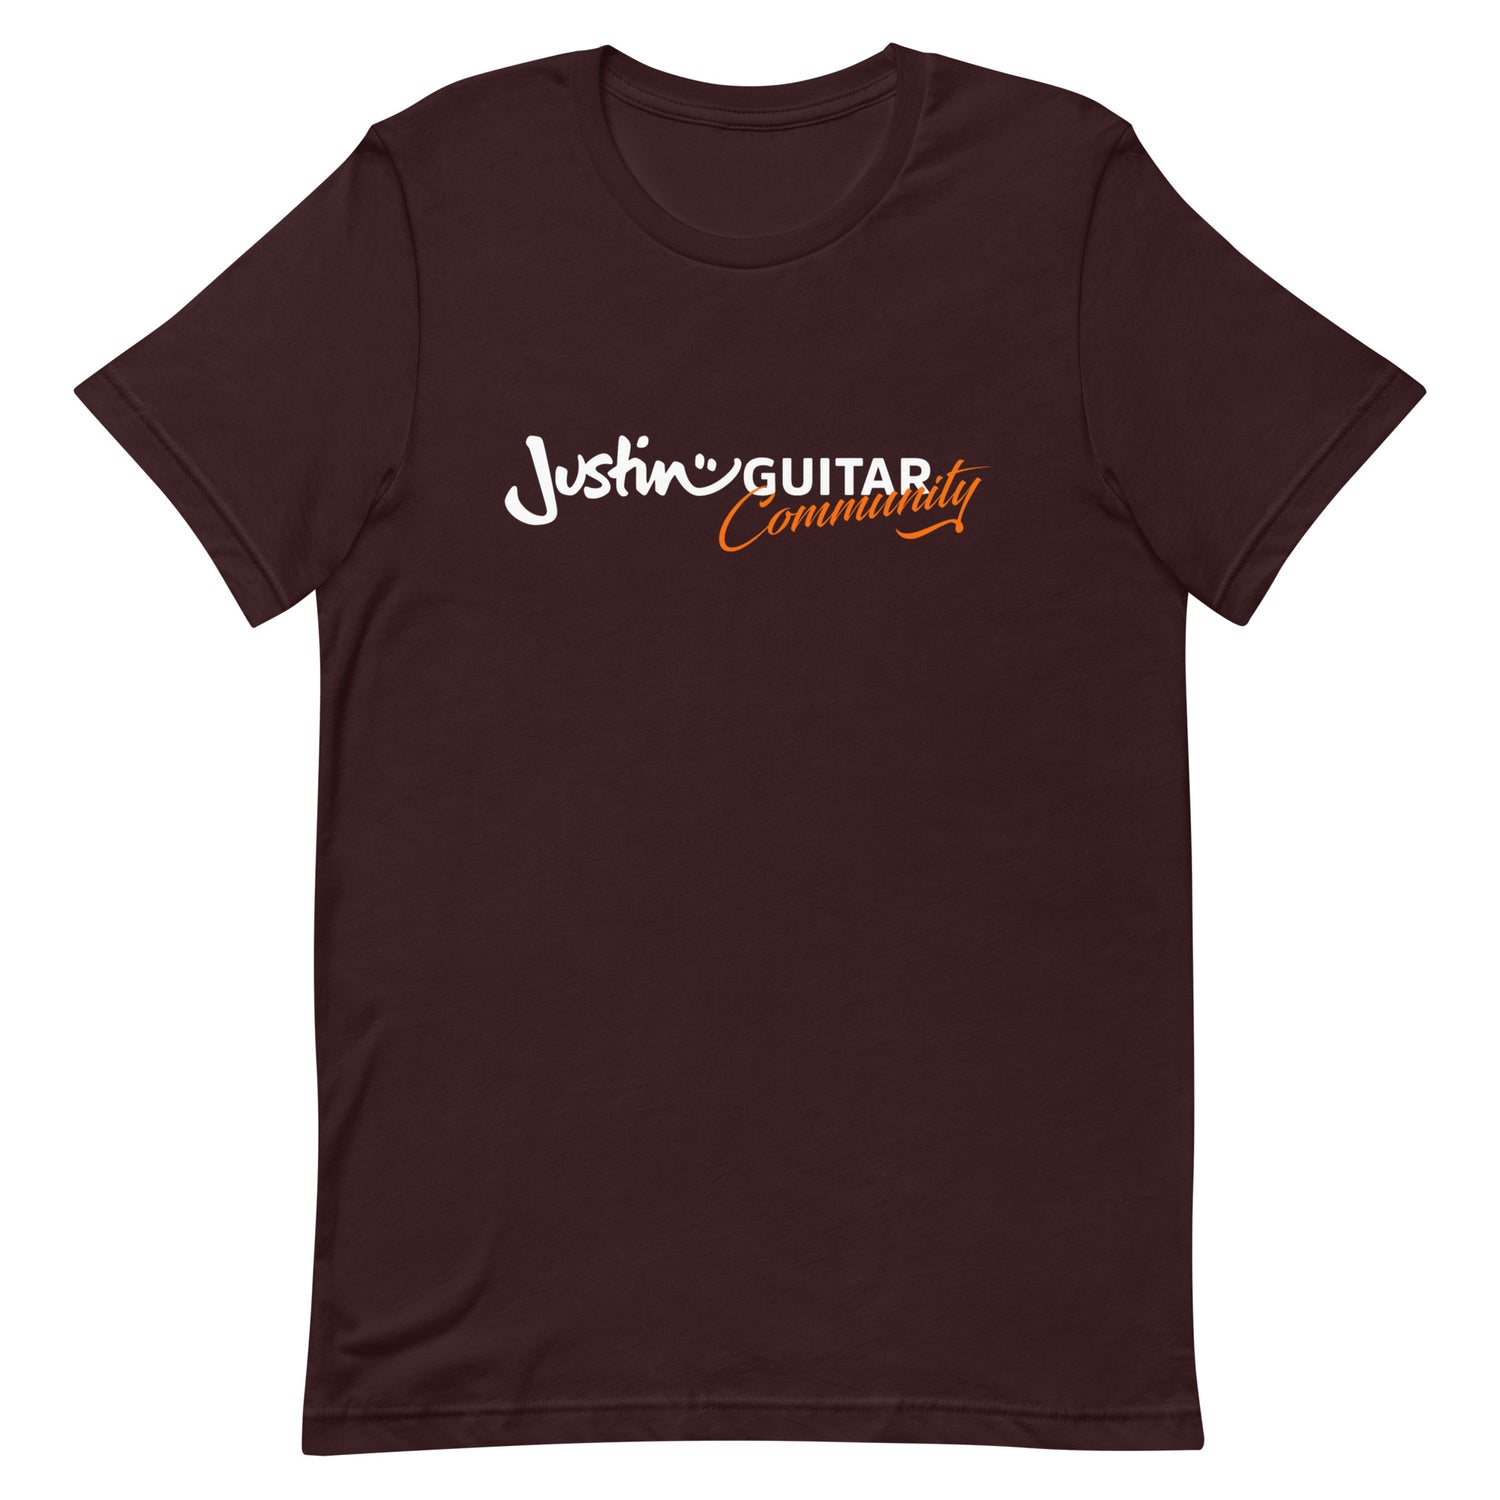 Oxblood tshirt with JustinGuitar Community logo.